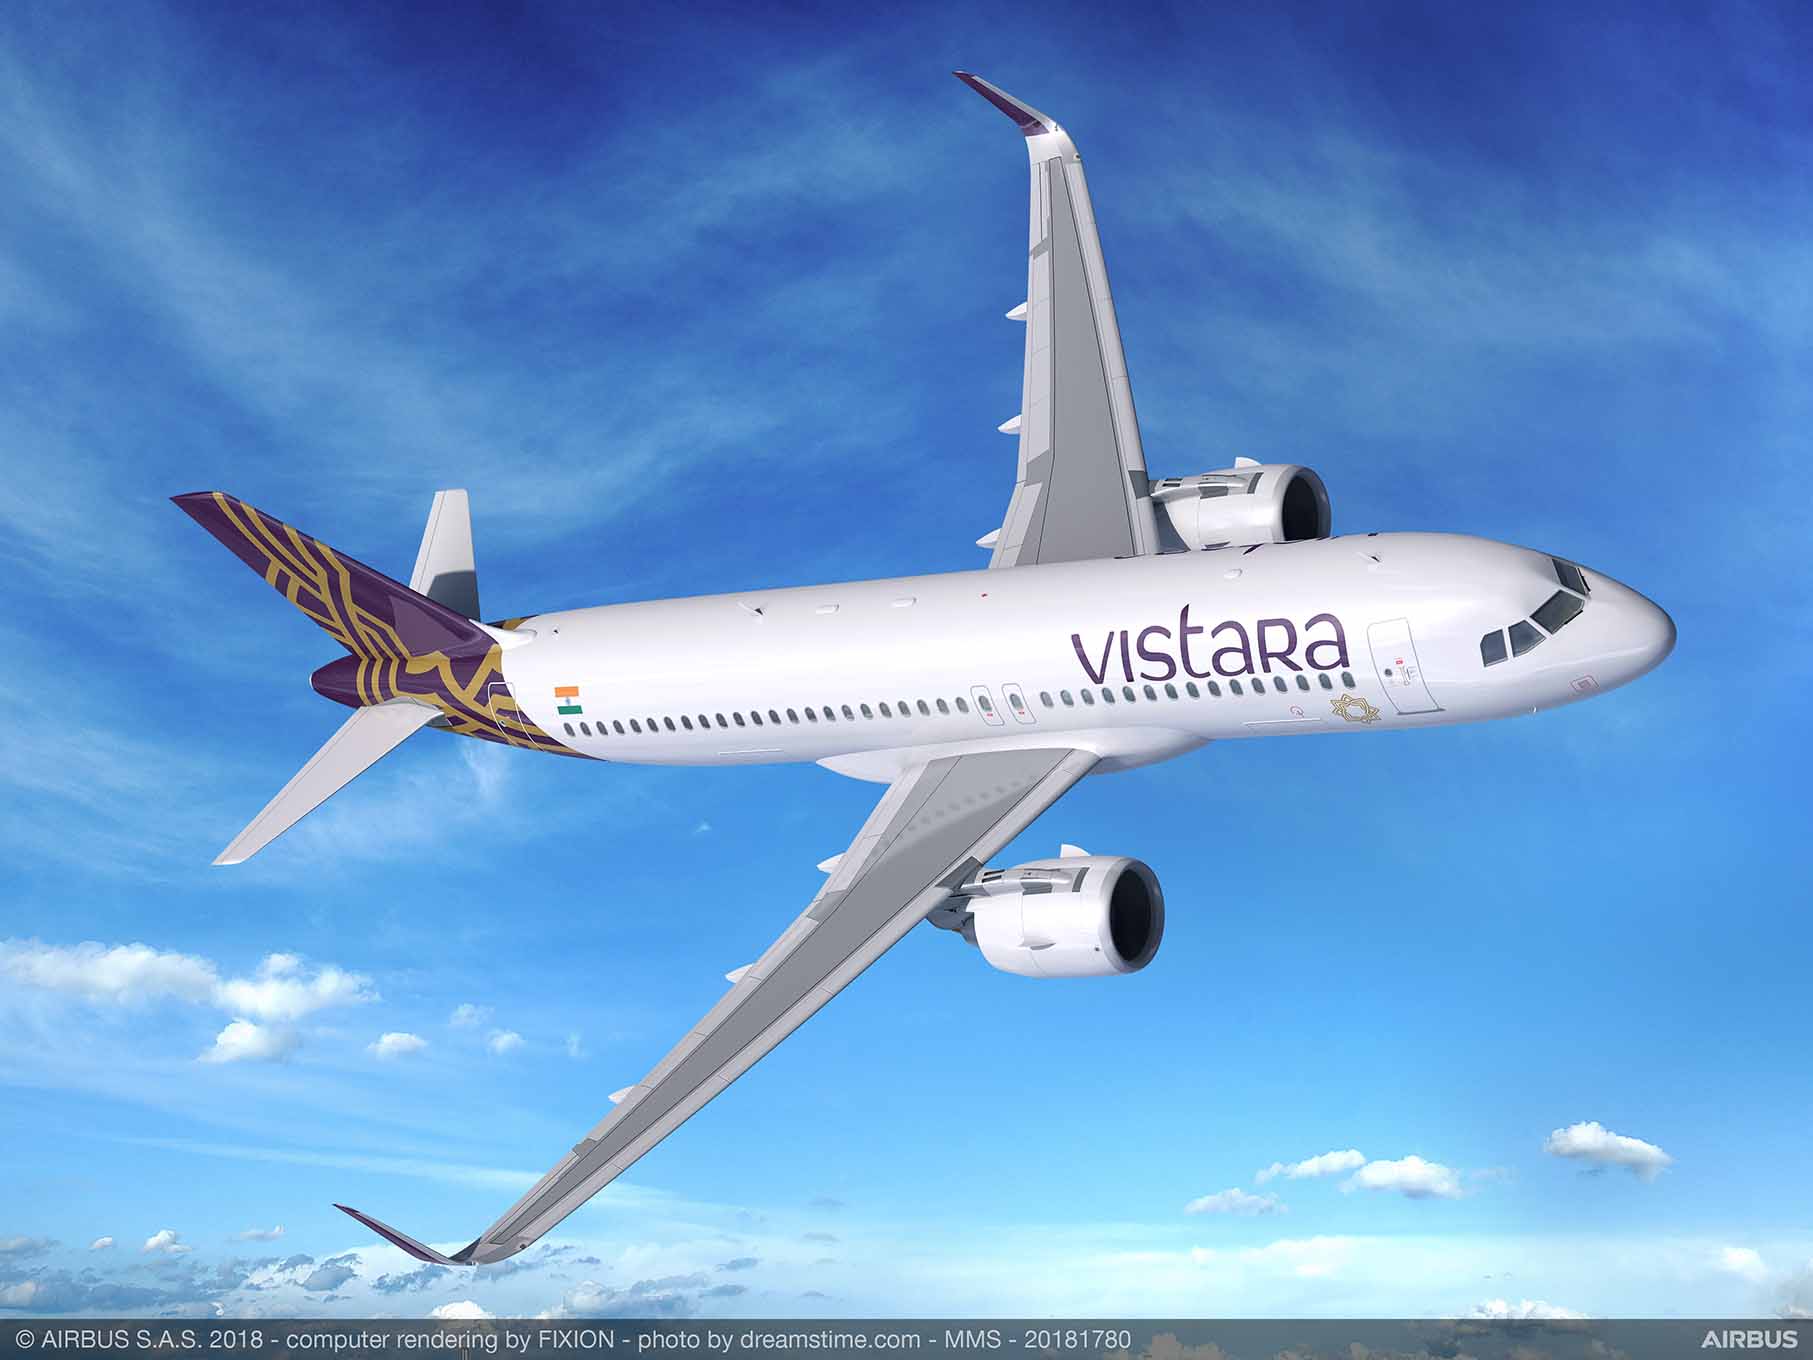 Vistara implements codeshares on SIA and SilkAir flights